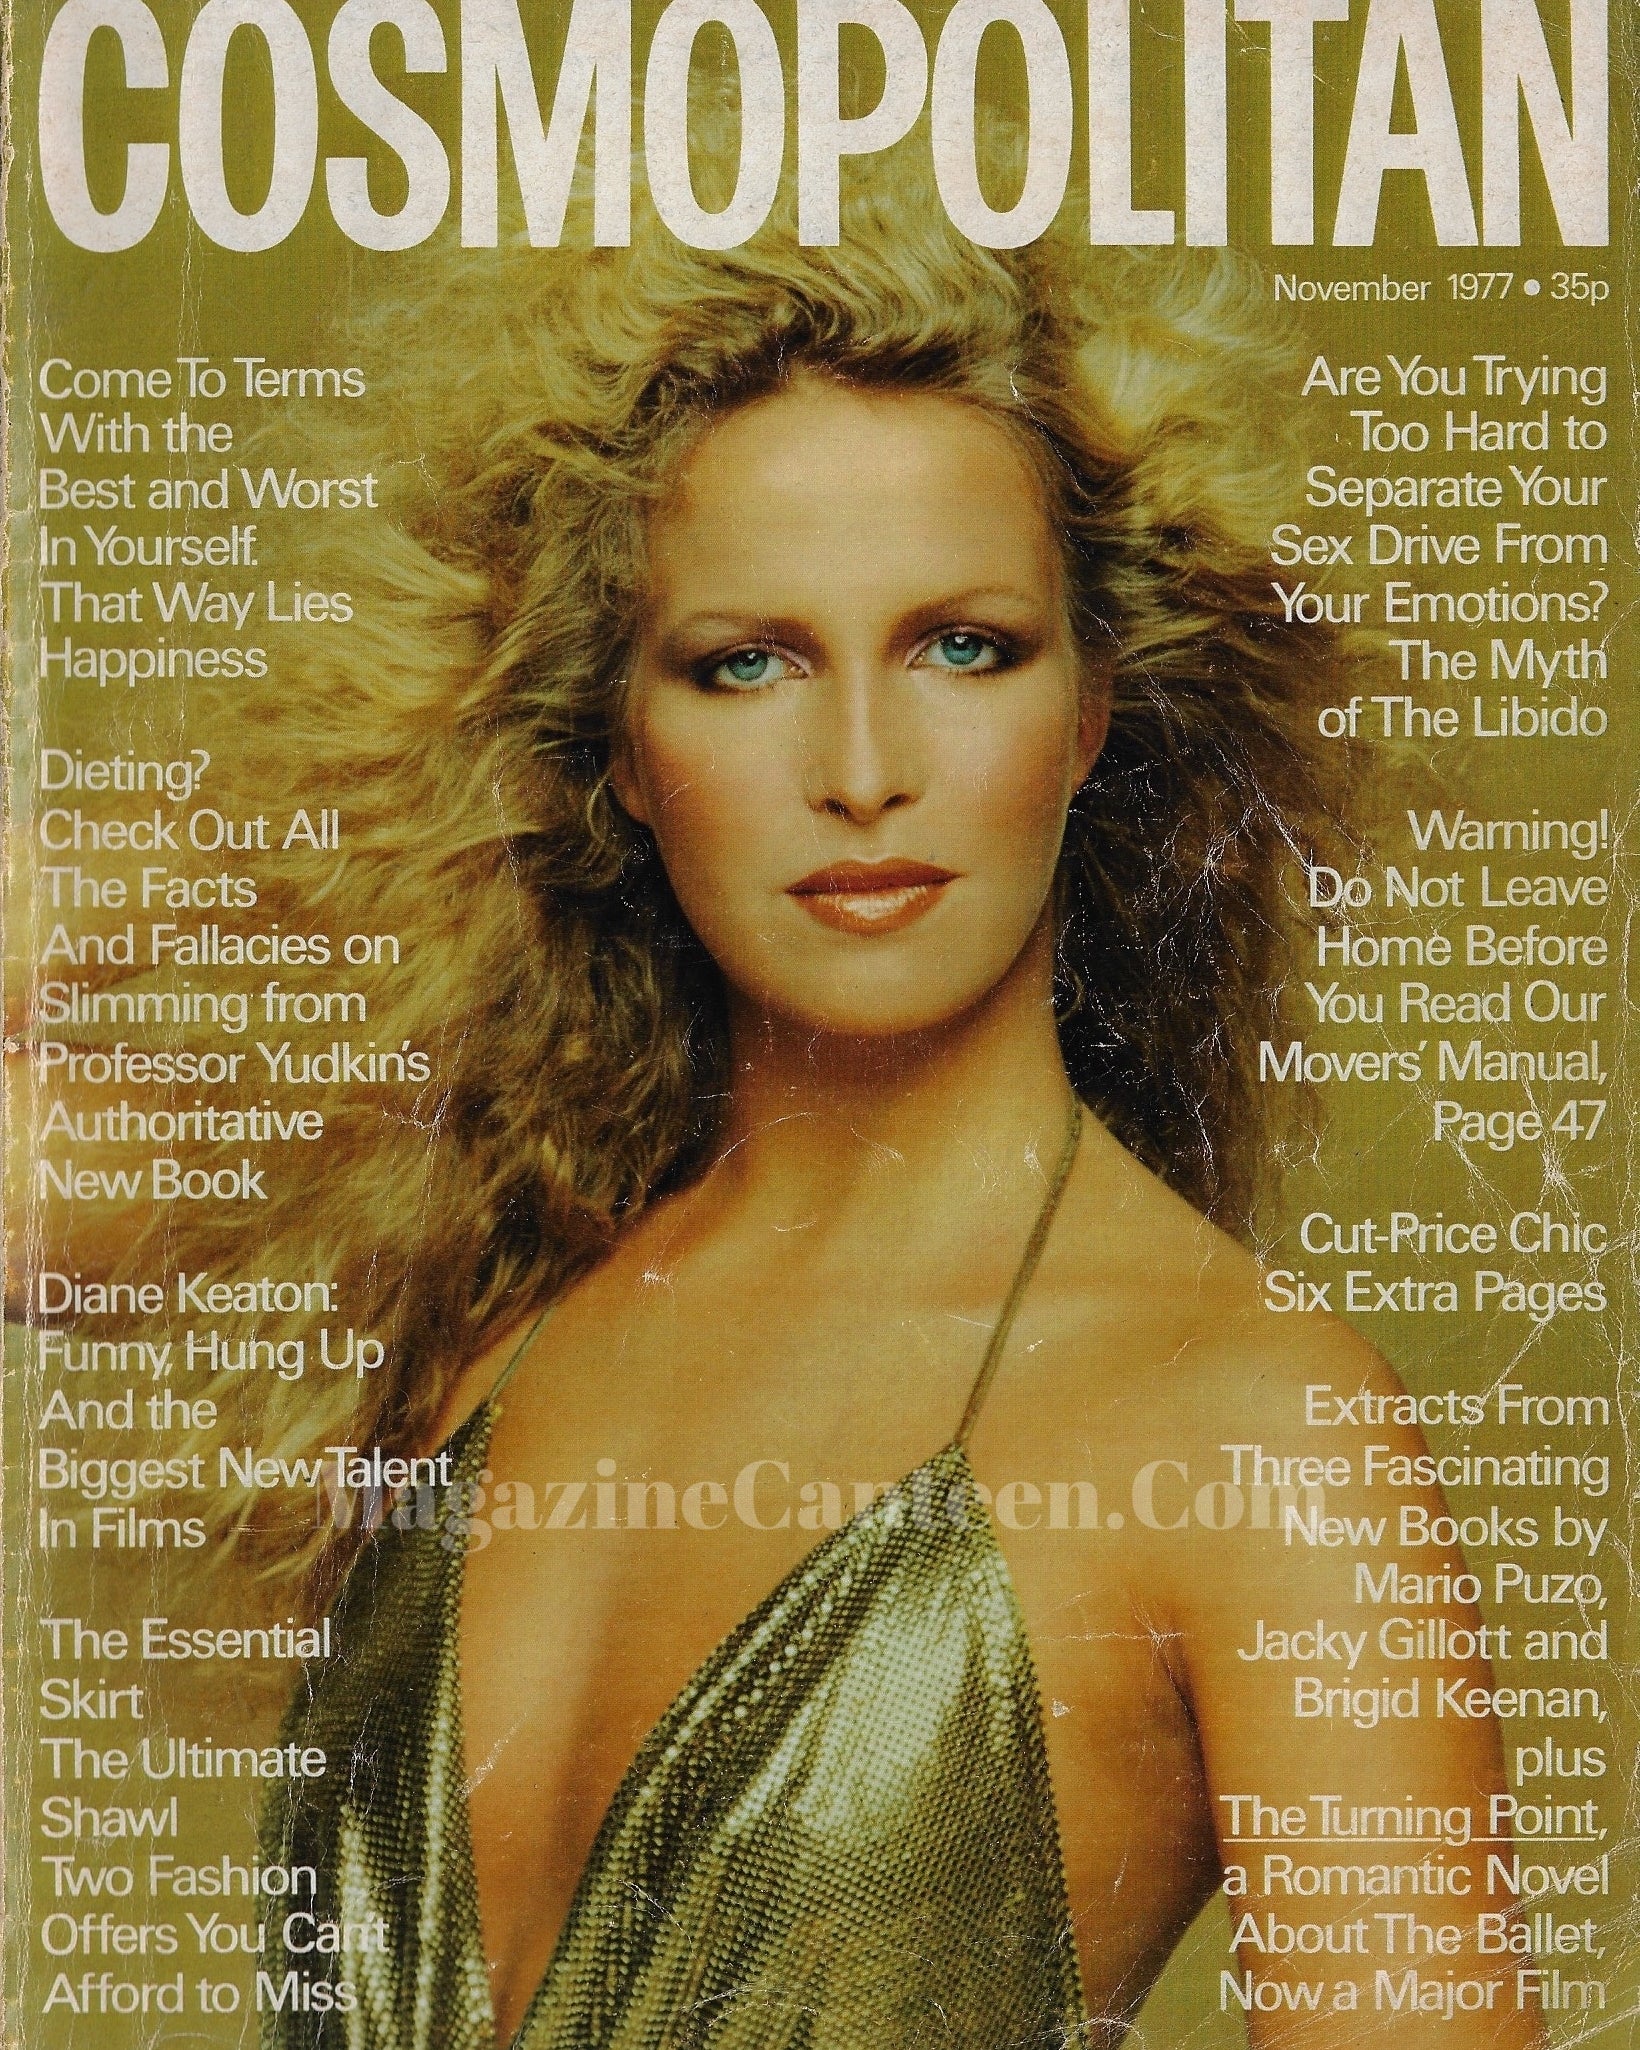 Cosmopolitan Magazine - Terence Donovan 1977